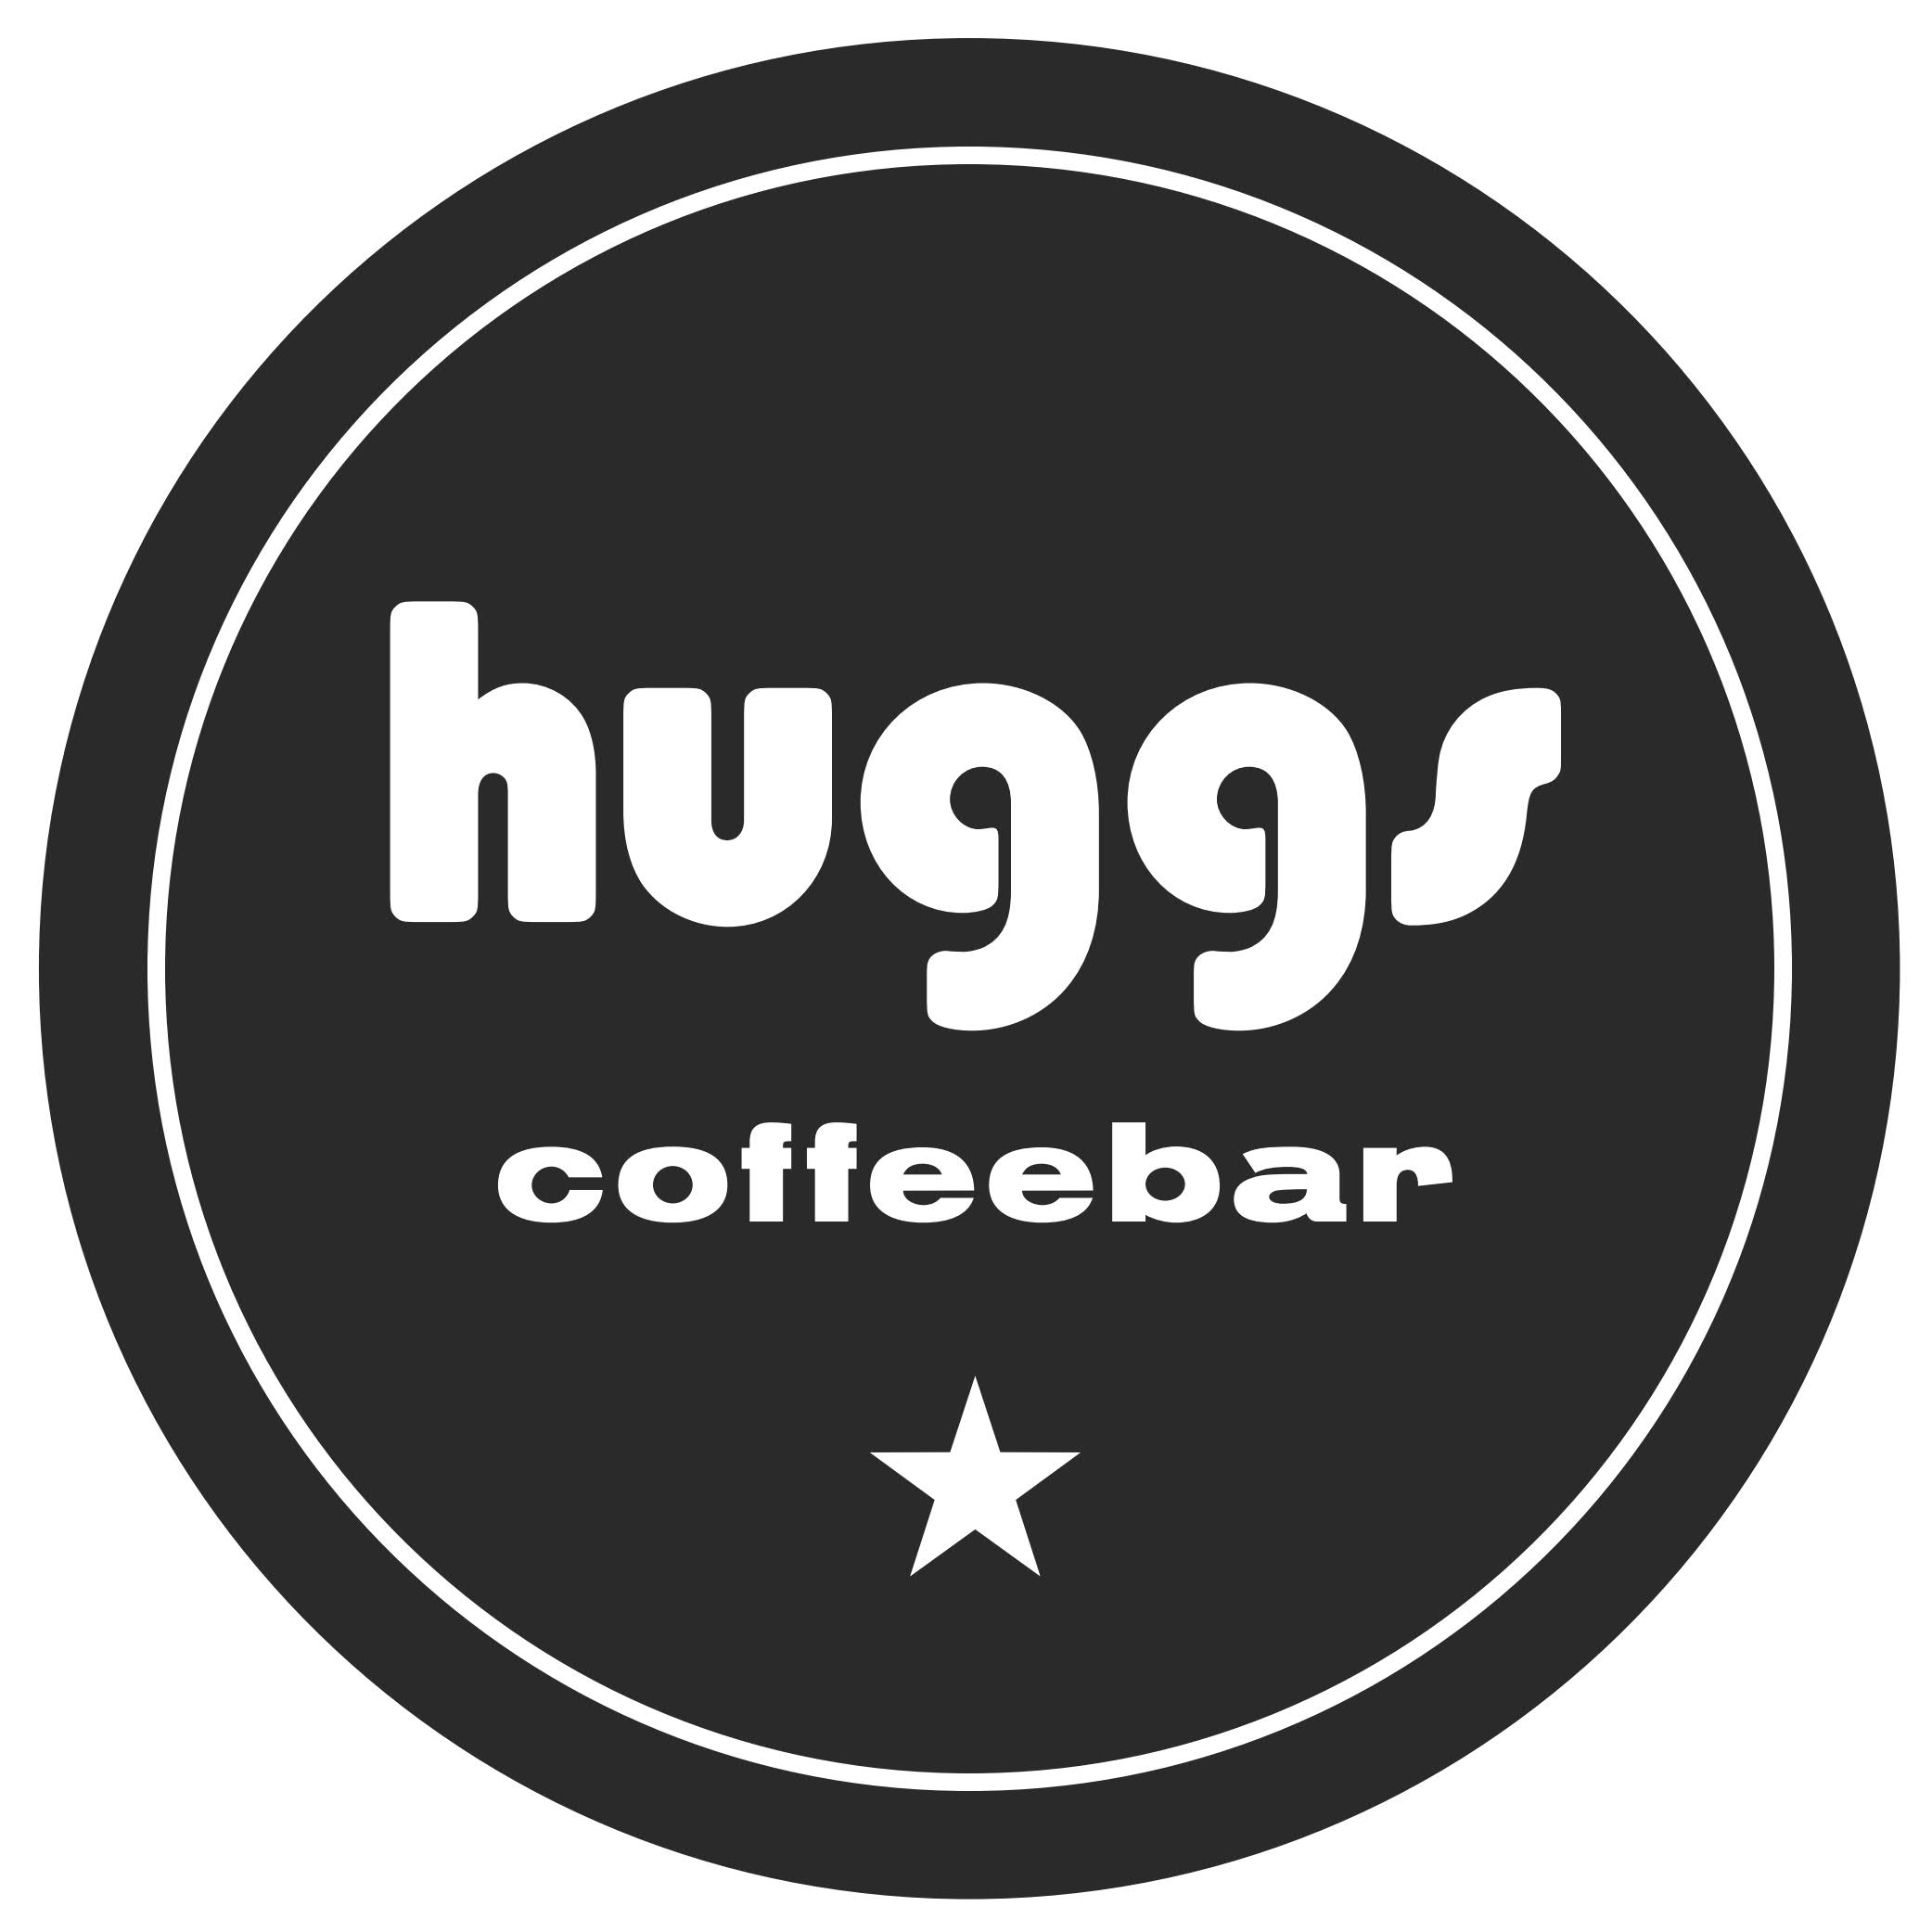 huggscoffeelogosquare.jpg